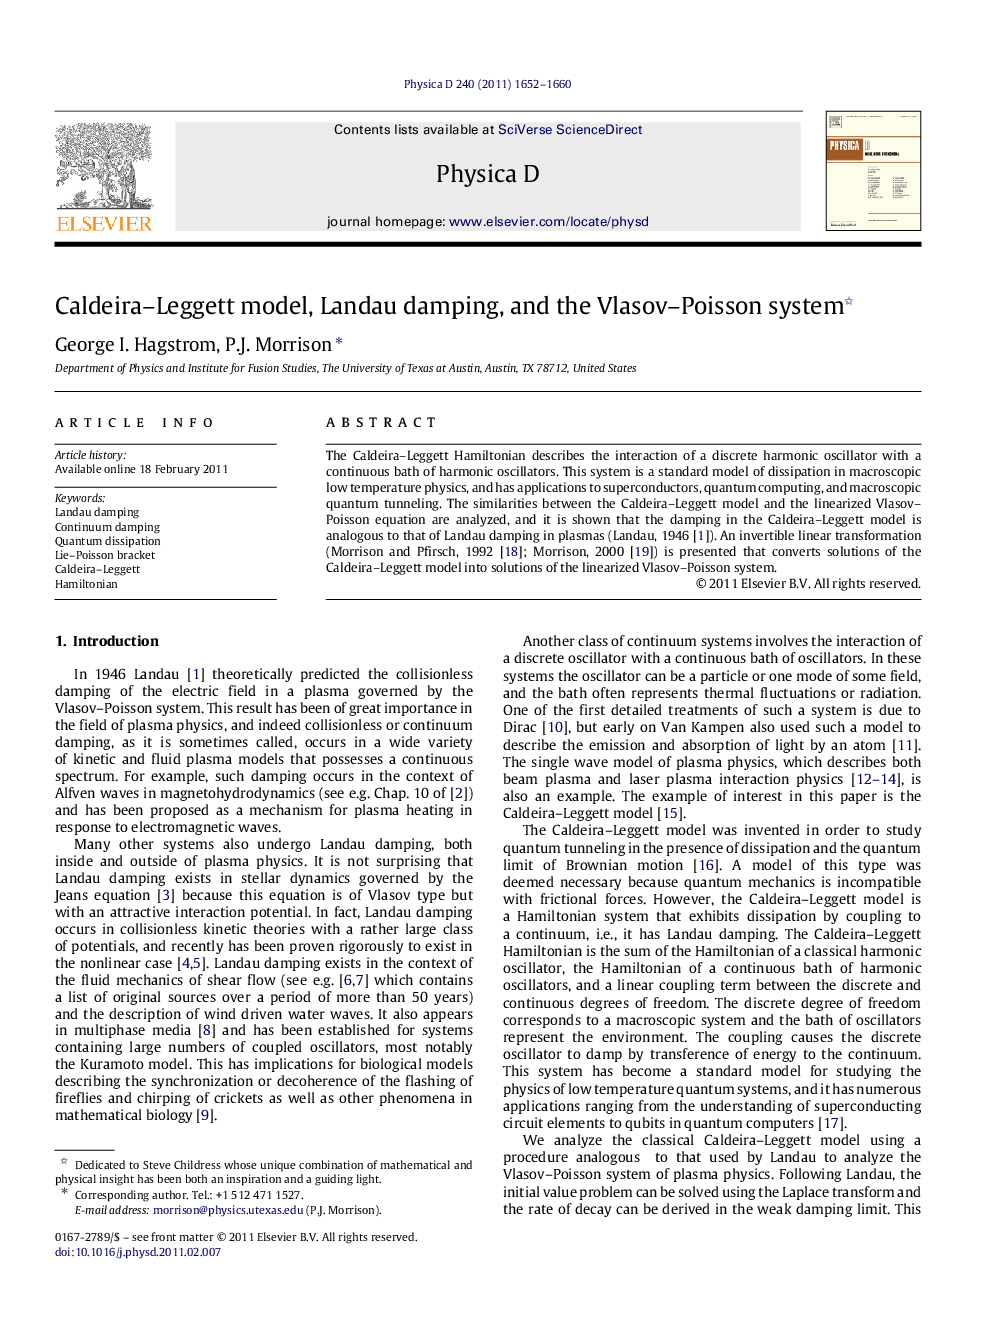 Caldeira–Leggett model, Landau damping, and the Vlasov–Poisson system 